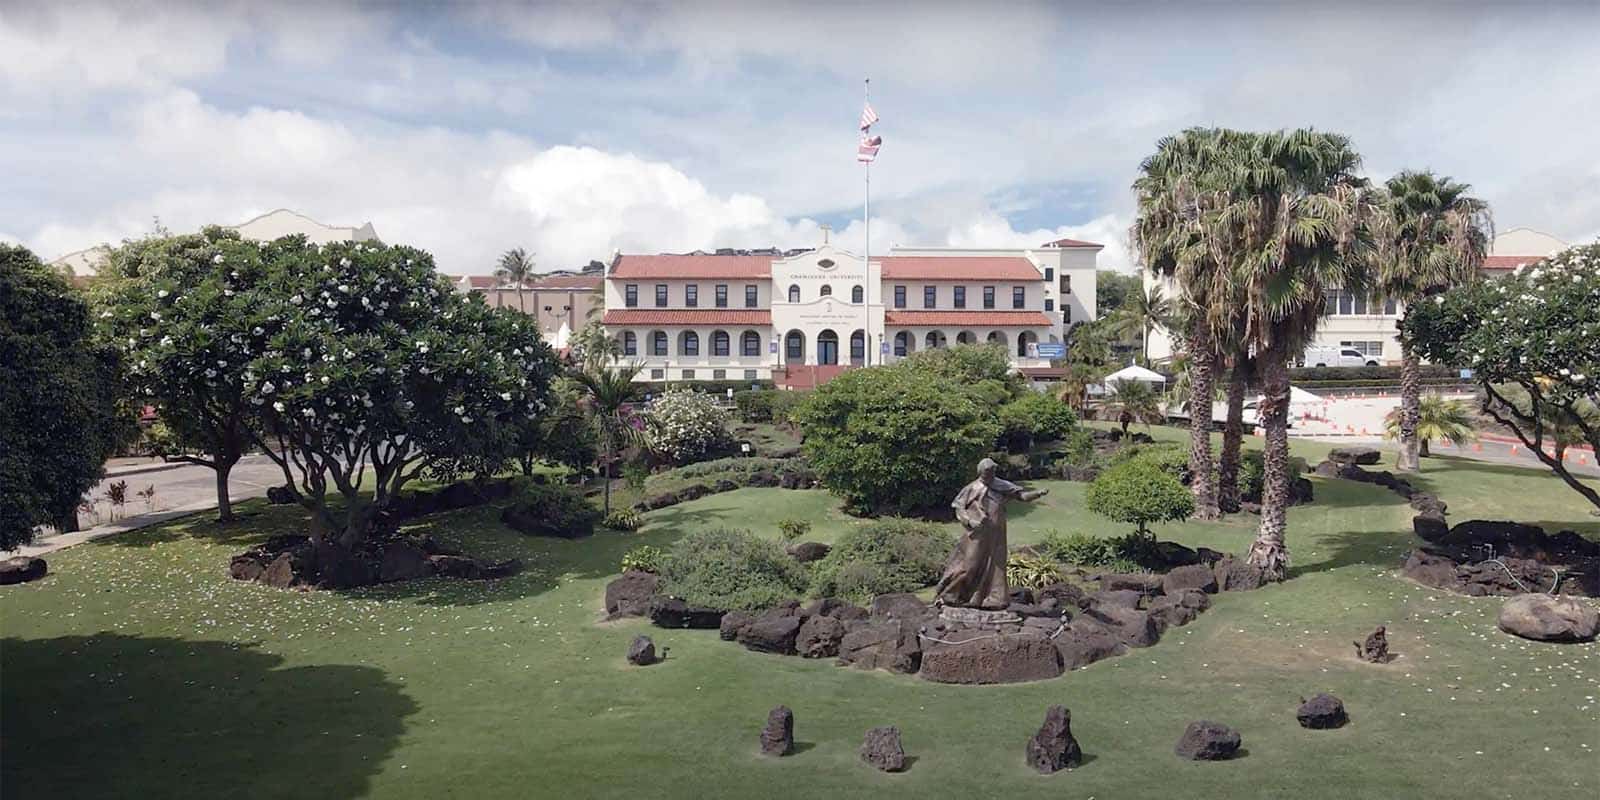 Visit Chaminade – Chaminade University of Honolulu